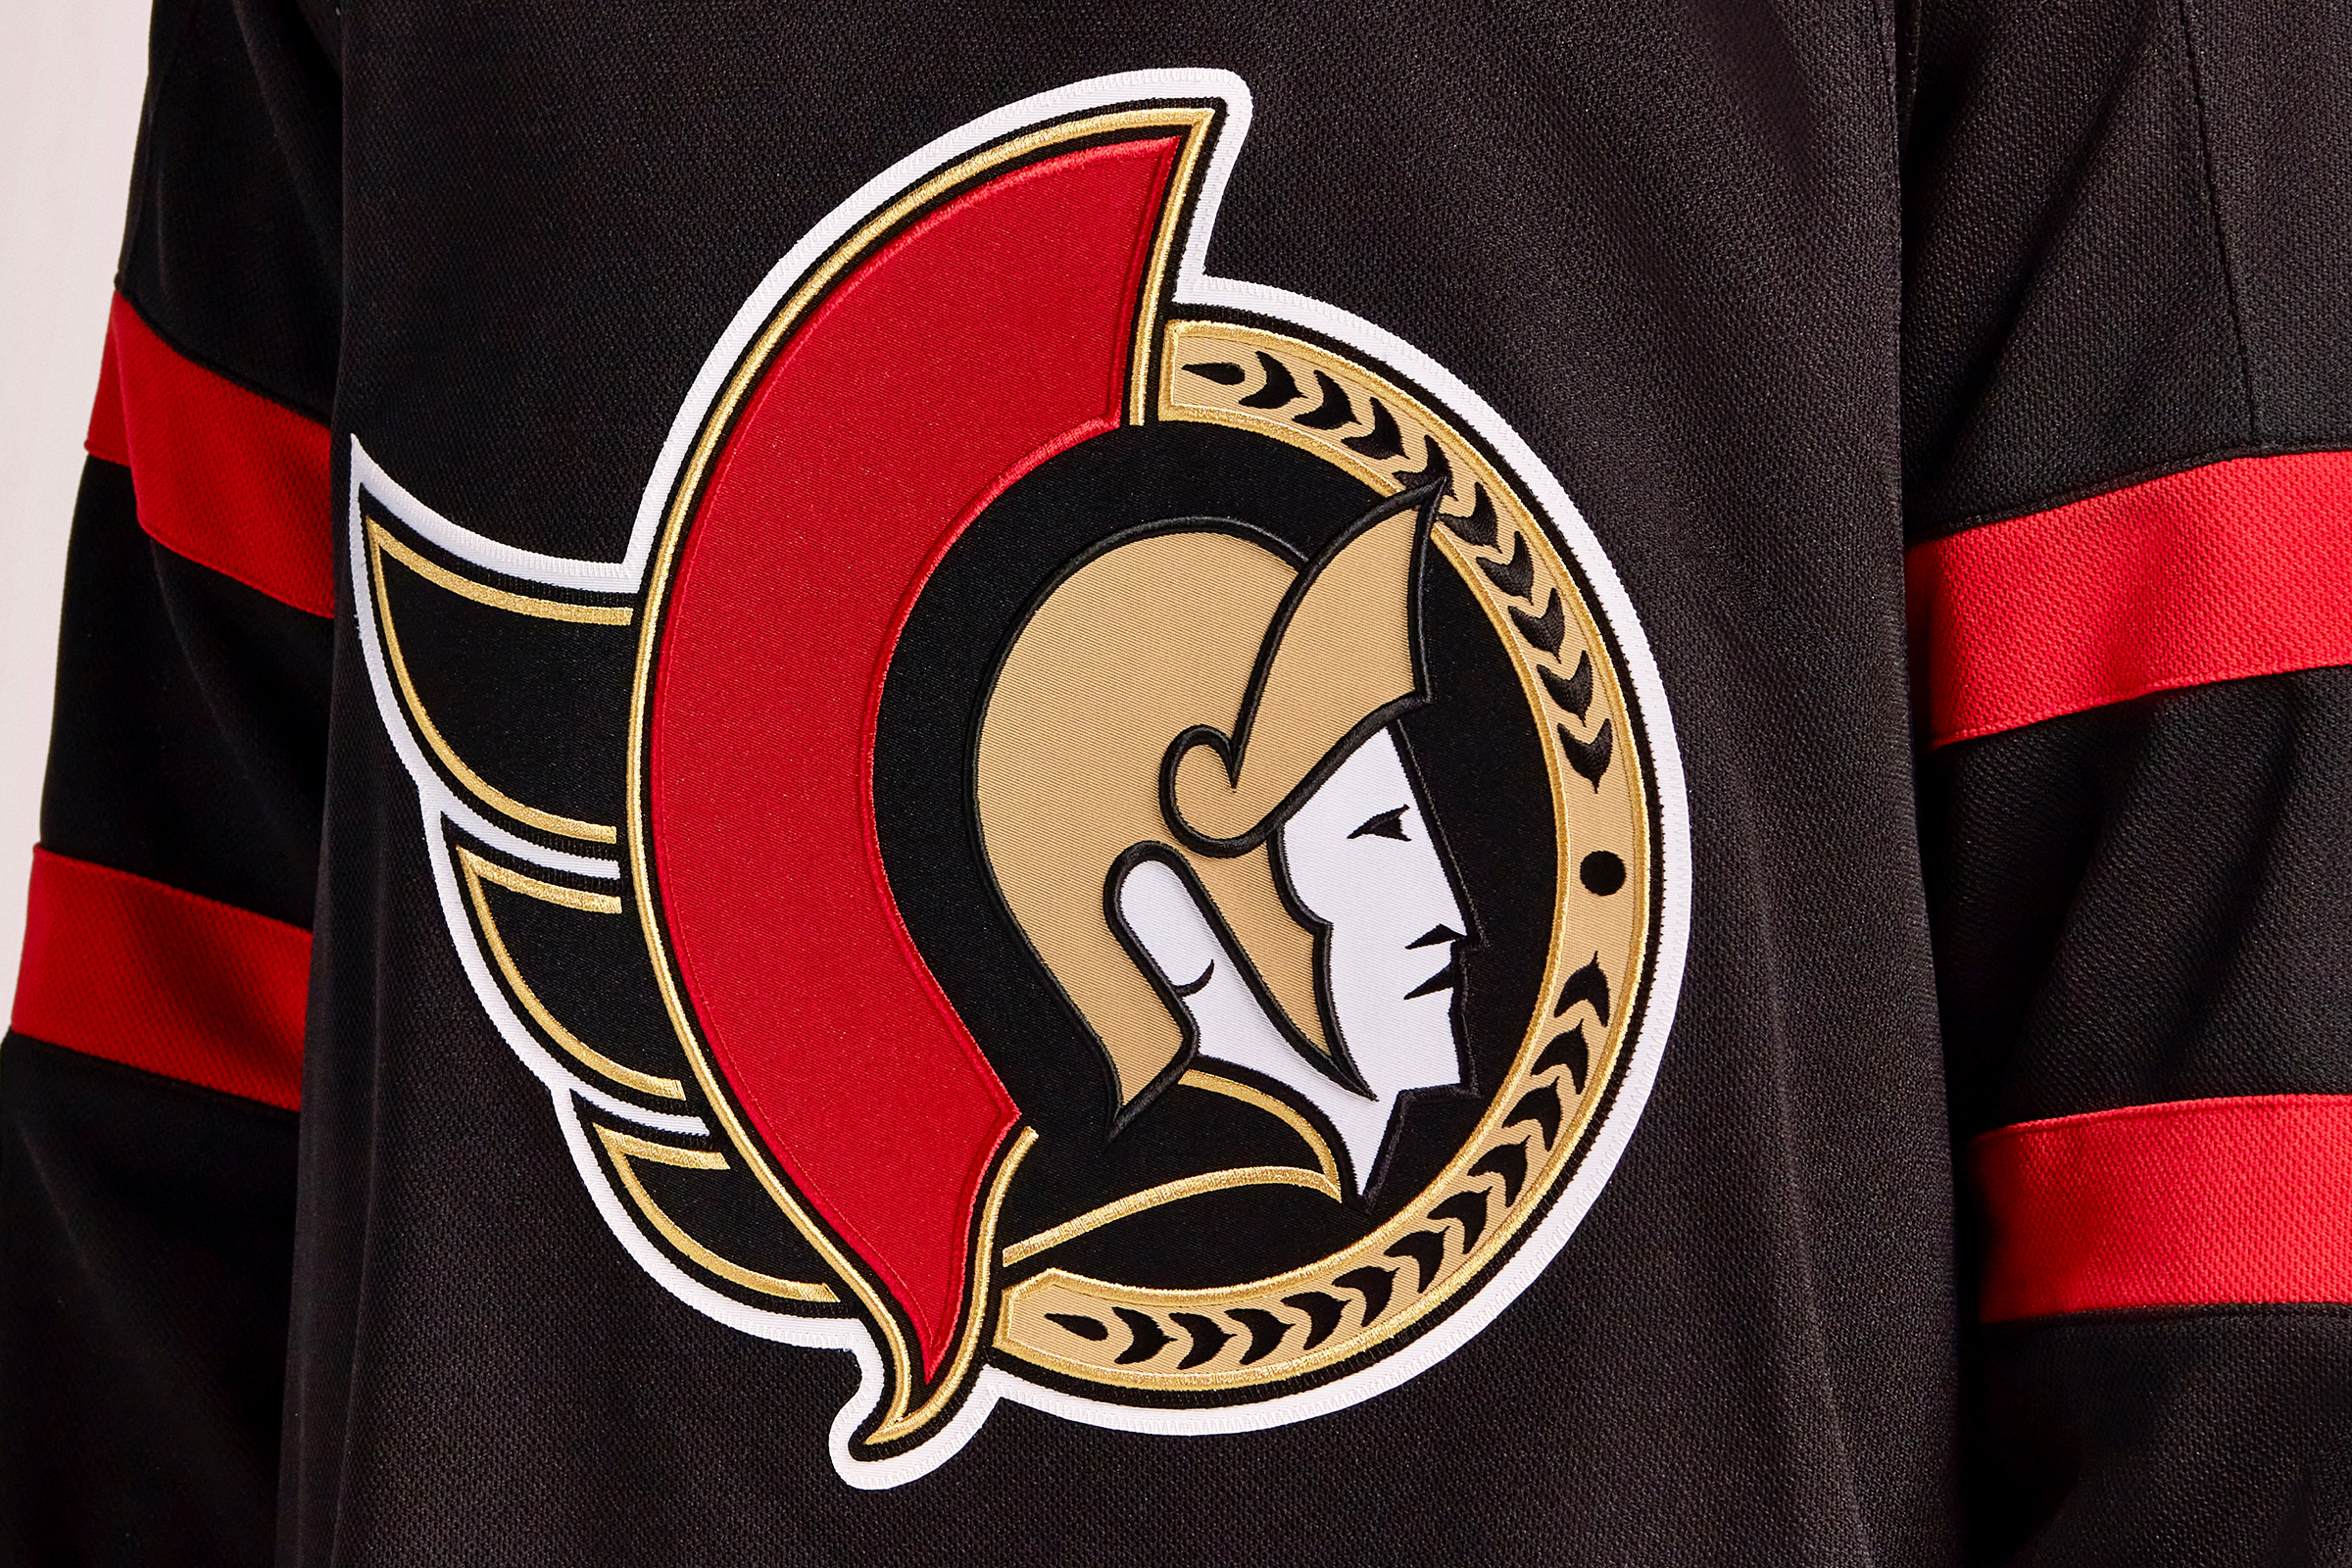 The Senators' new jersey.